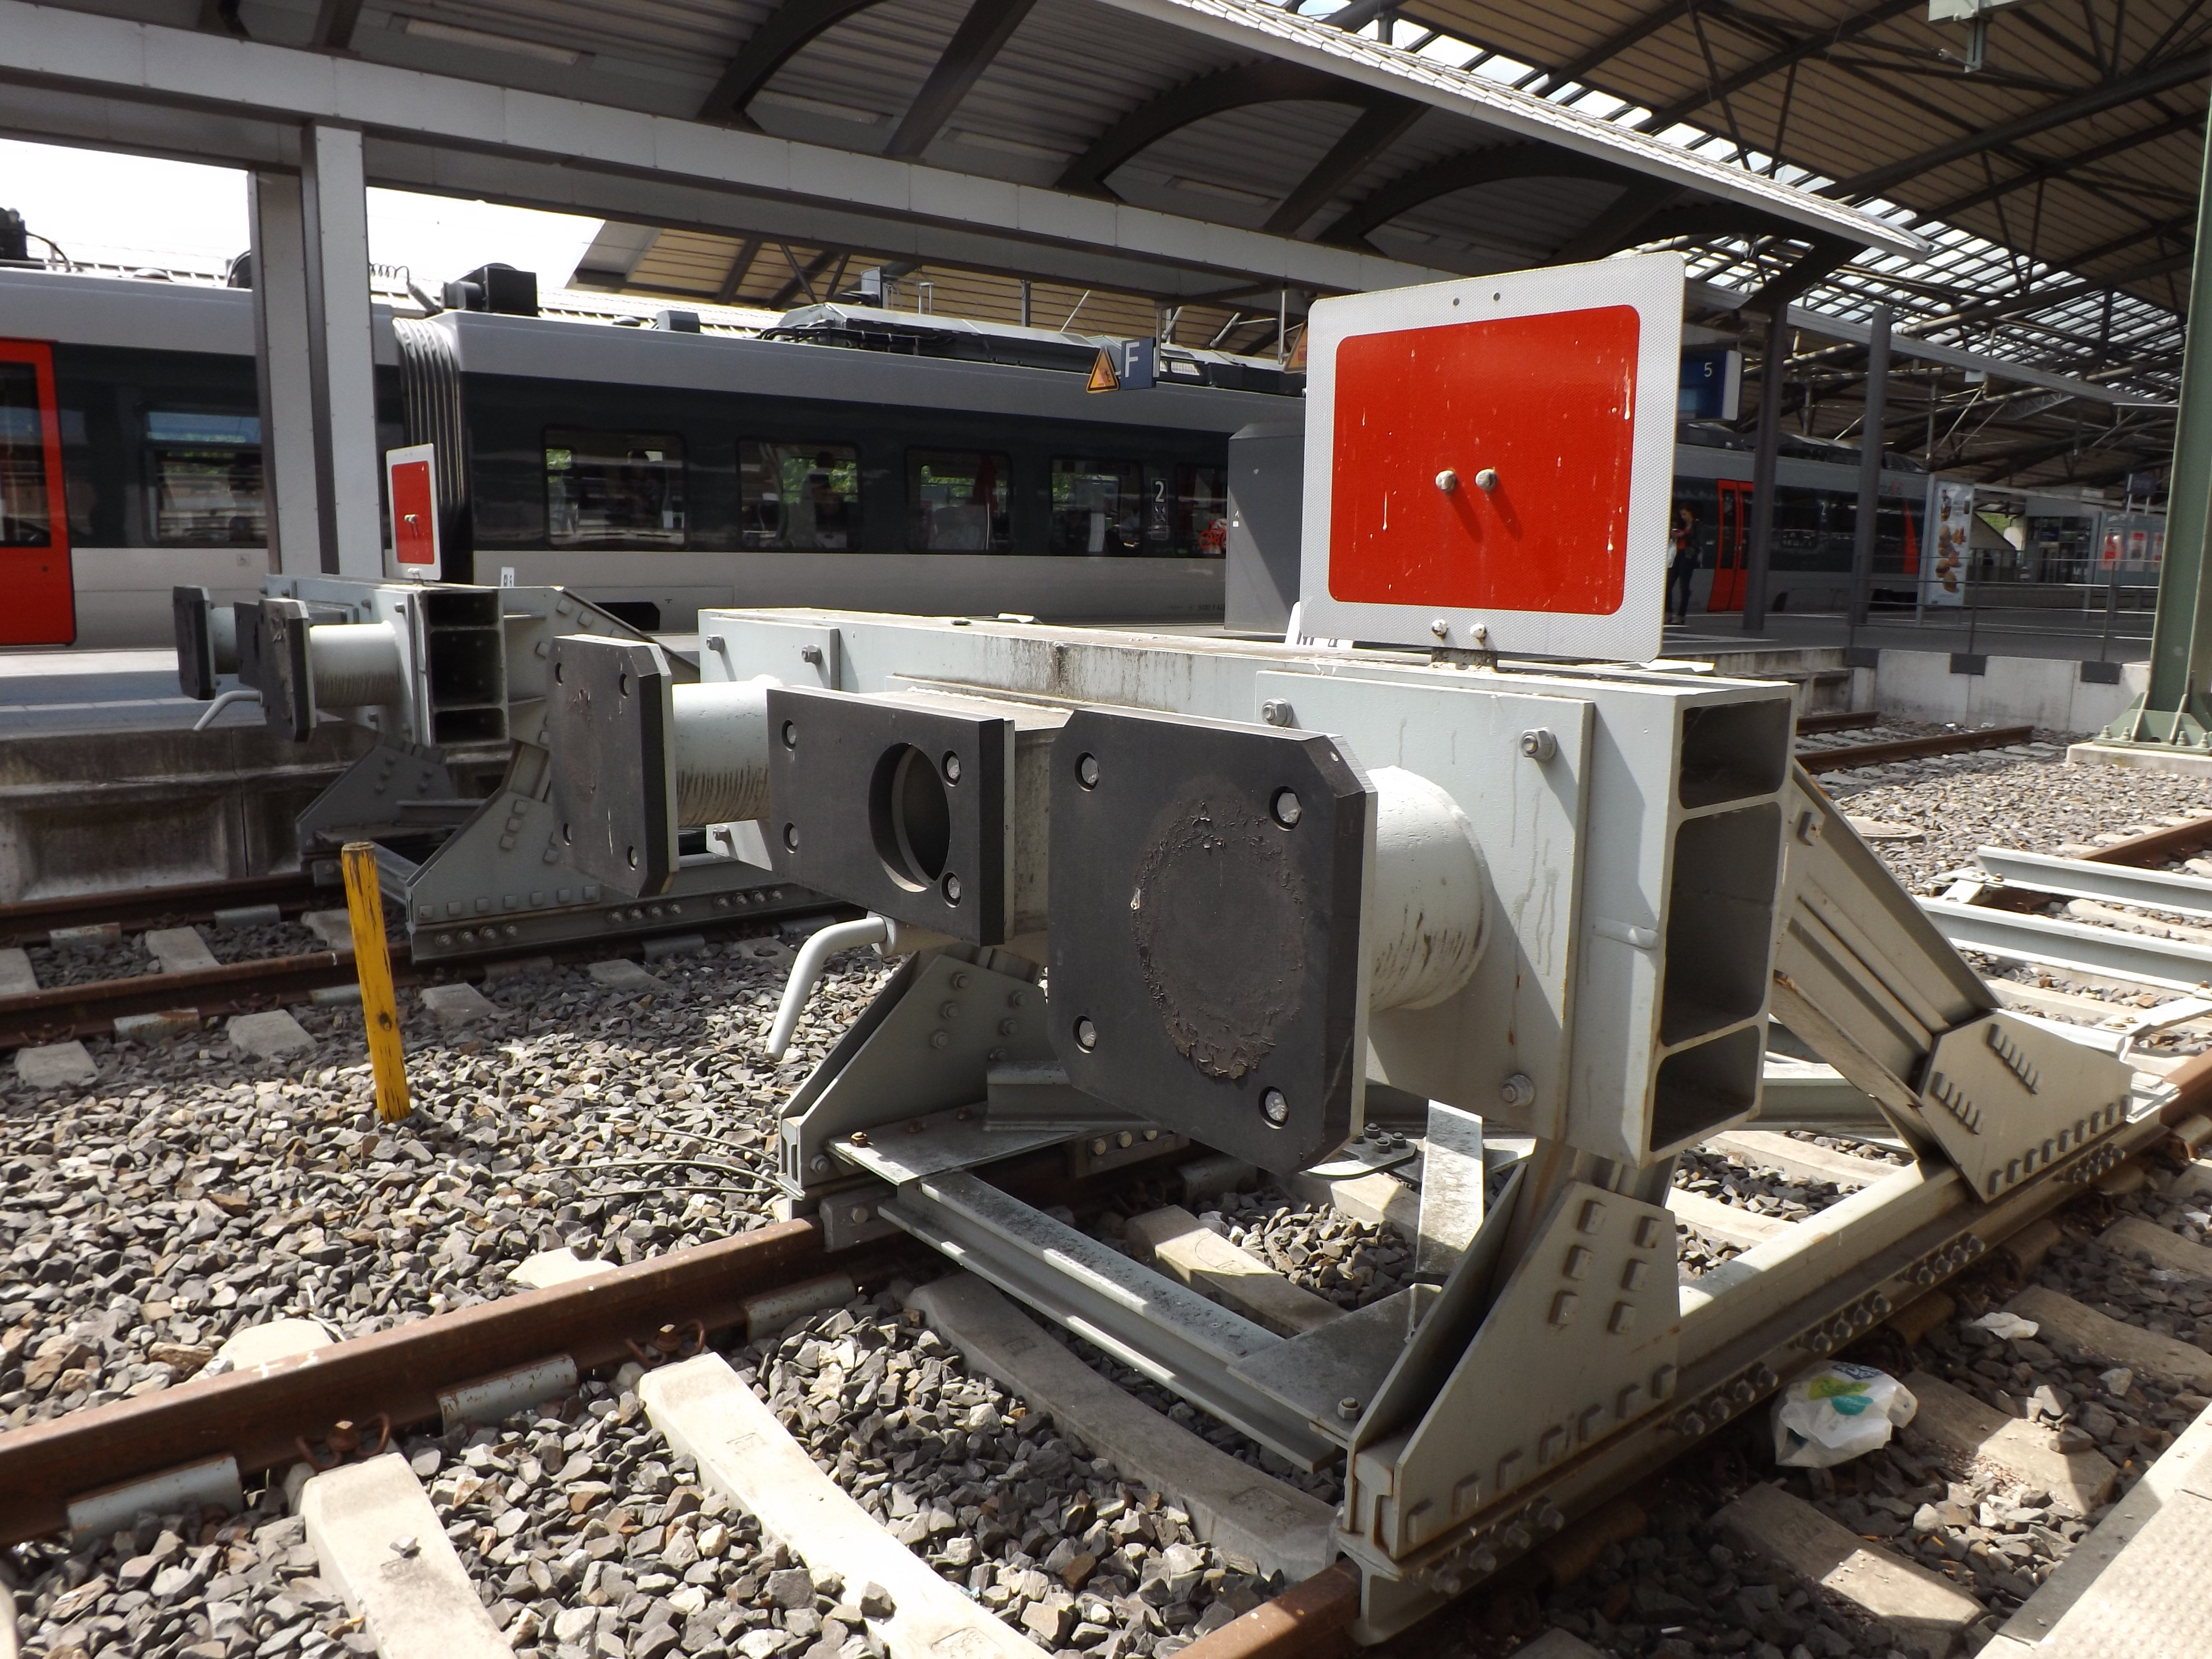 Symbolbild: Ein Prellbock im Bahnhof. (Foto: © Michael Loeper / pixelio.de)